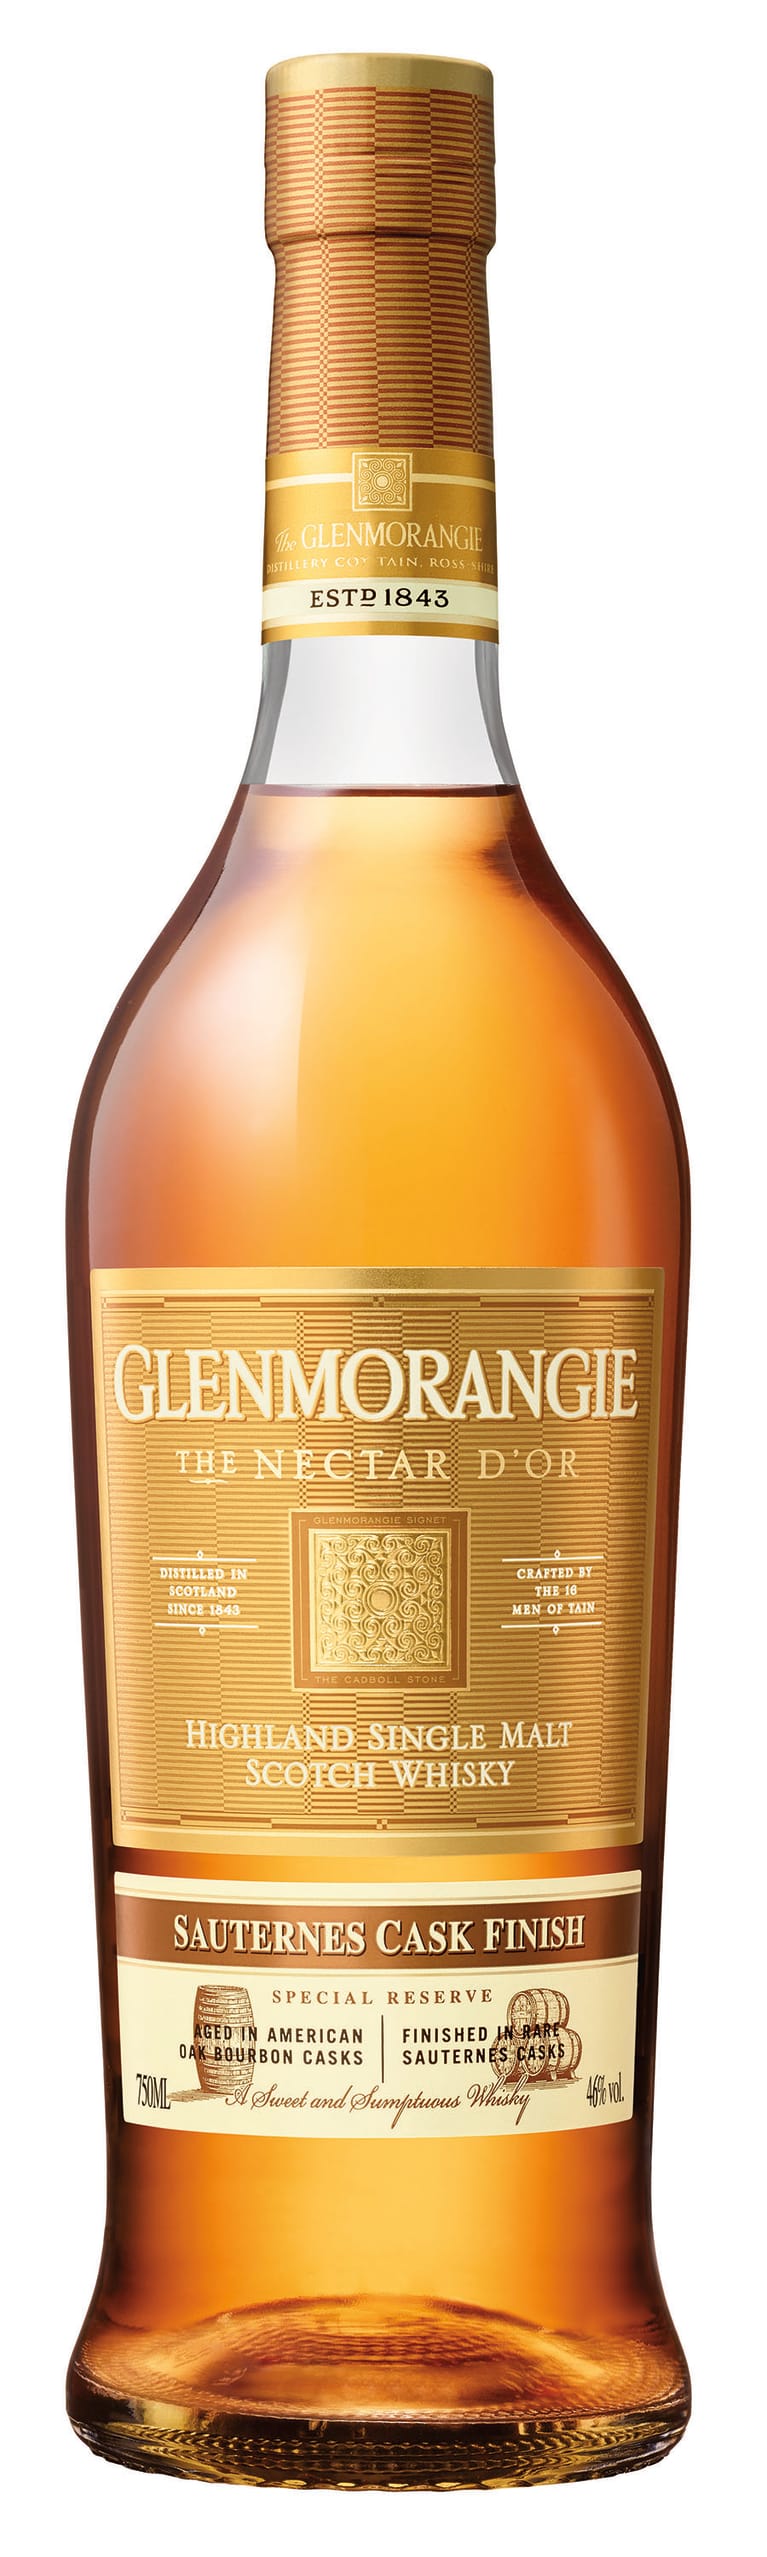 Glenmorangie Nectar D’Or Sauternes Cask Finish